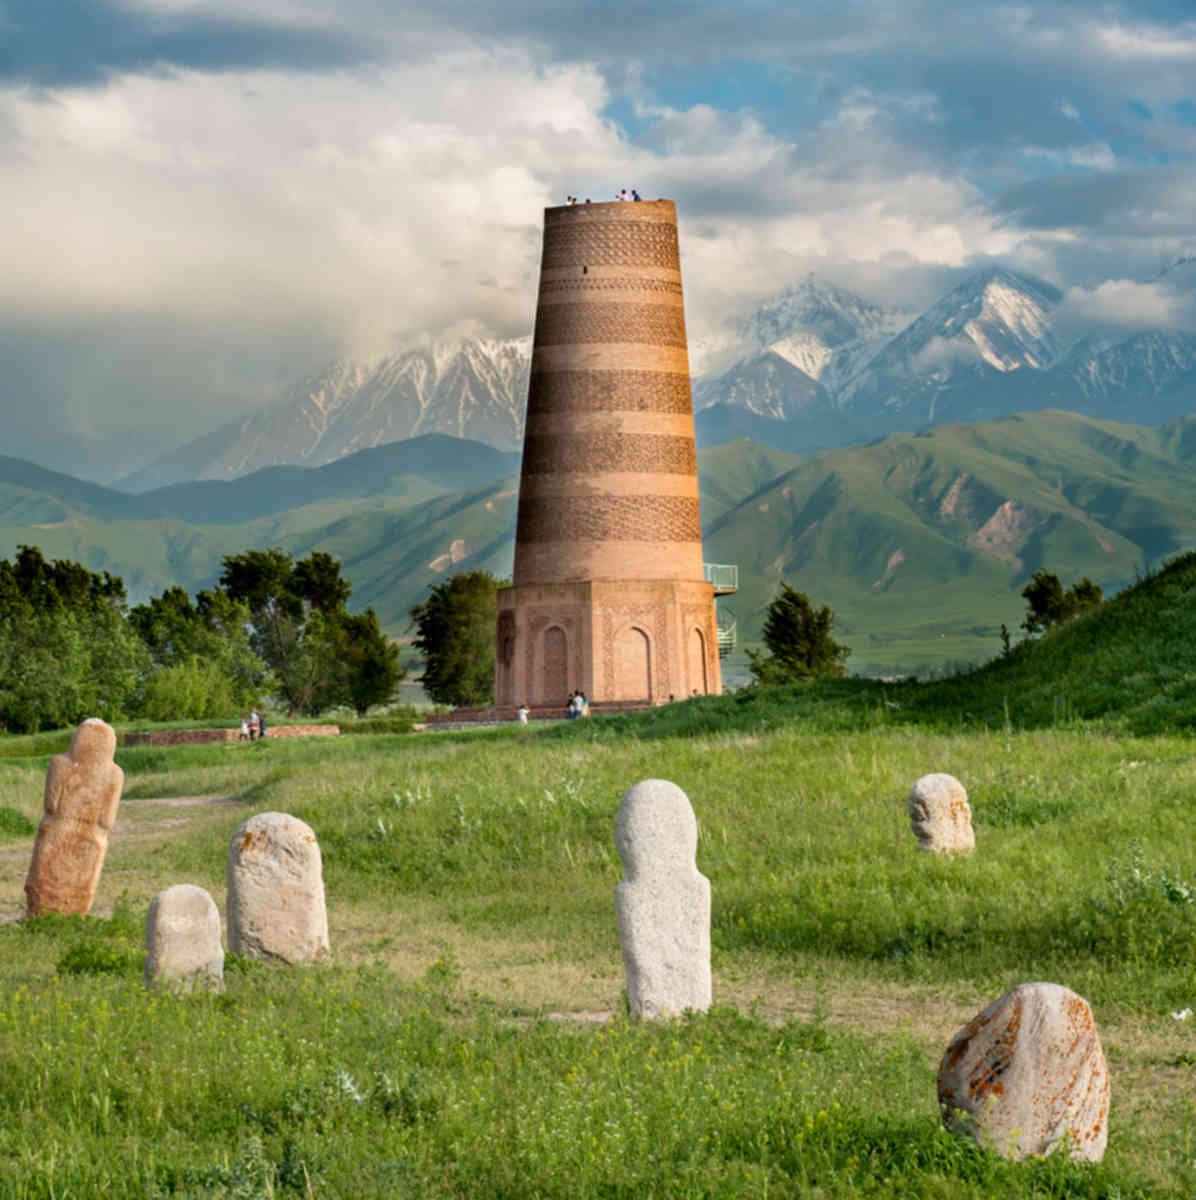 Кыргызстан это киргизия или нет. Башня Бурана Киргизия. Токмак башня Бурана. Башня Бурана Чуйская область. Киргизия достопримечательности башня Бурана.